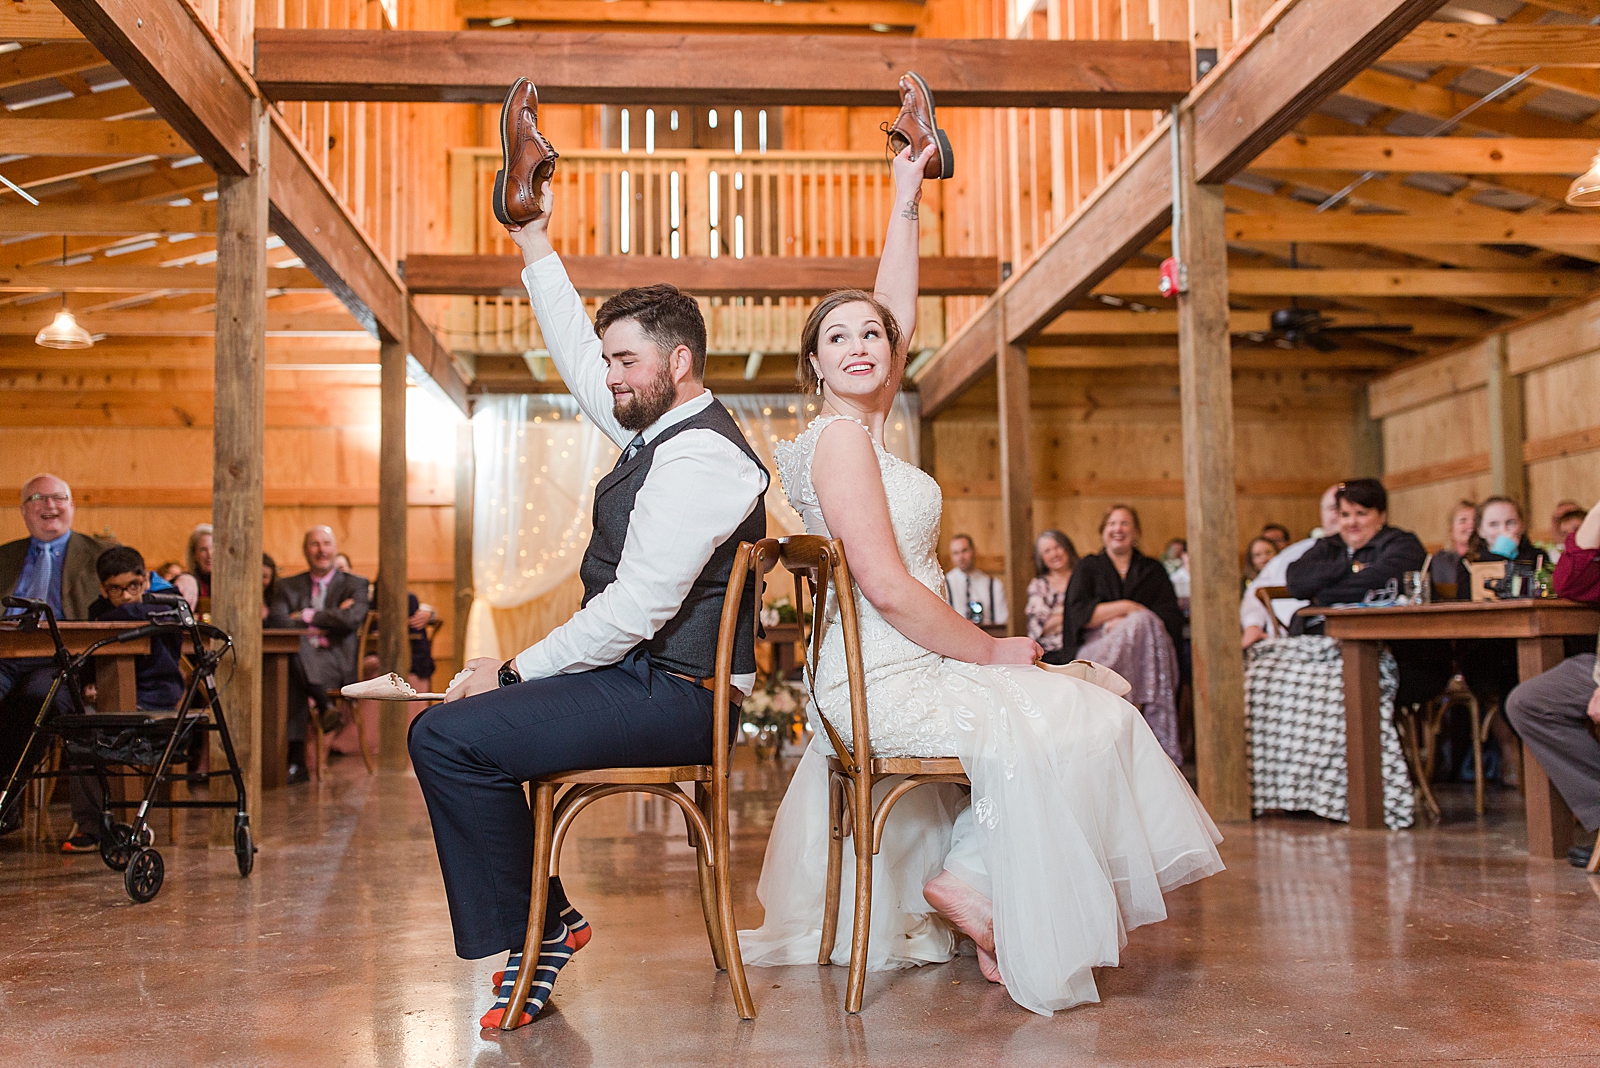 Macedonia Hills Wedding Reception Bride and Groom shoe game photo